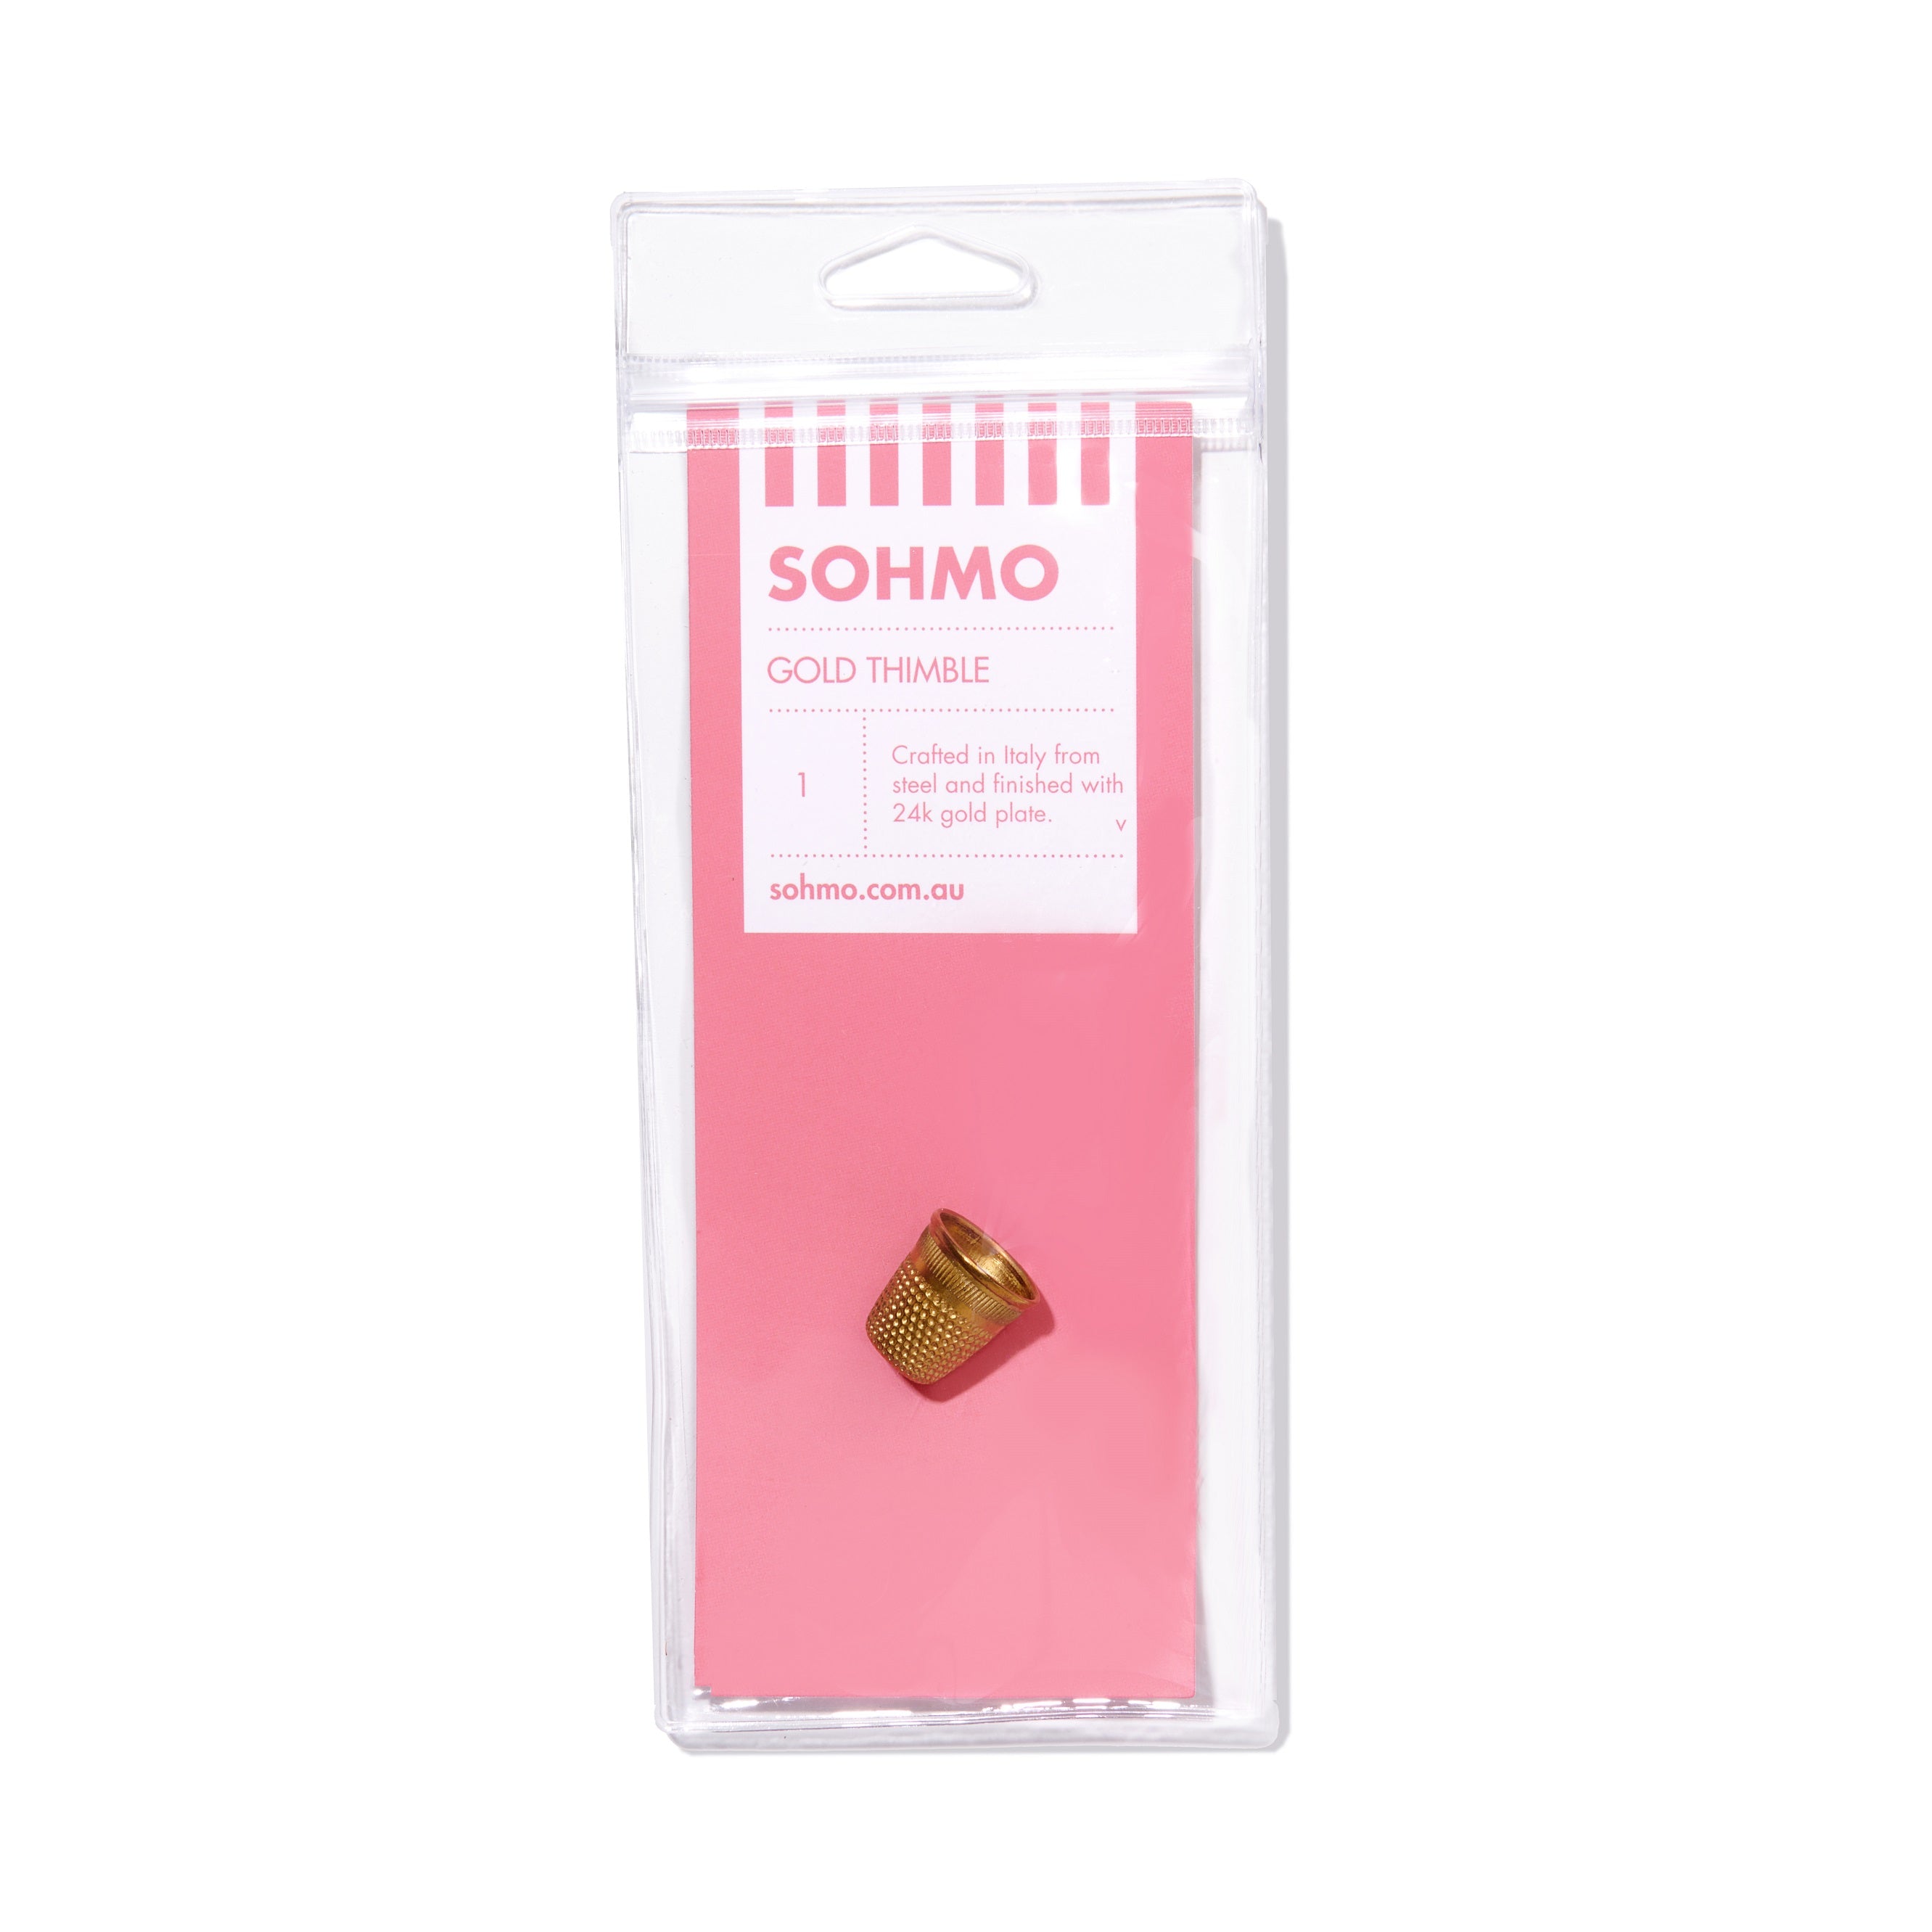 SOHMO Gold thimble in reusable vinyl pouch